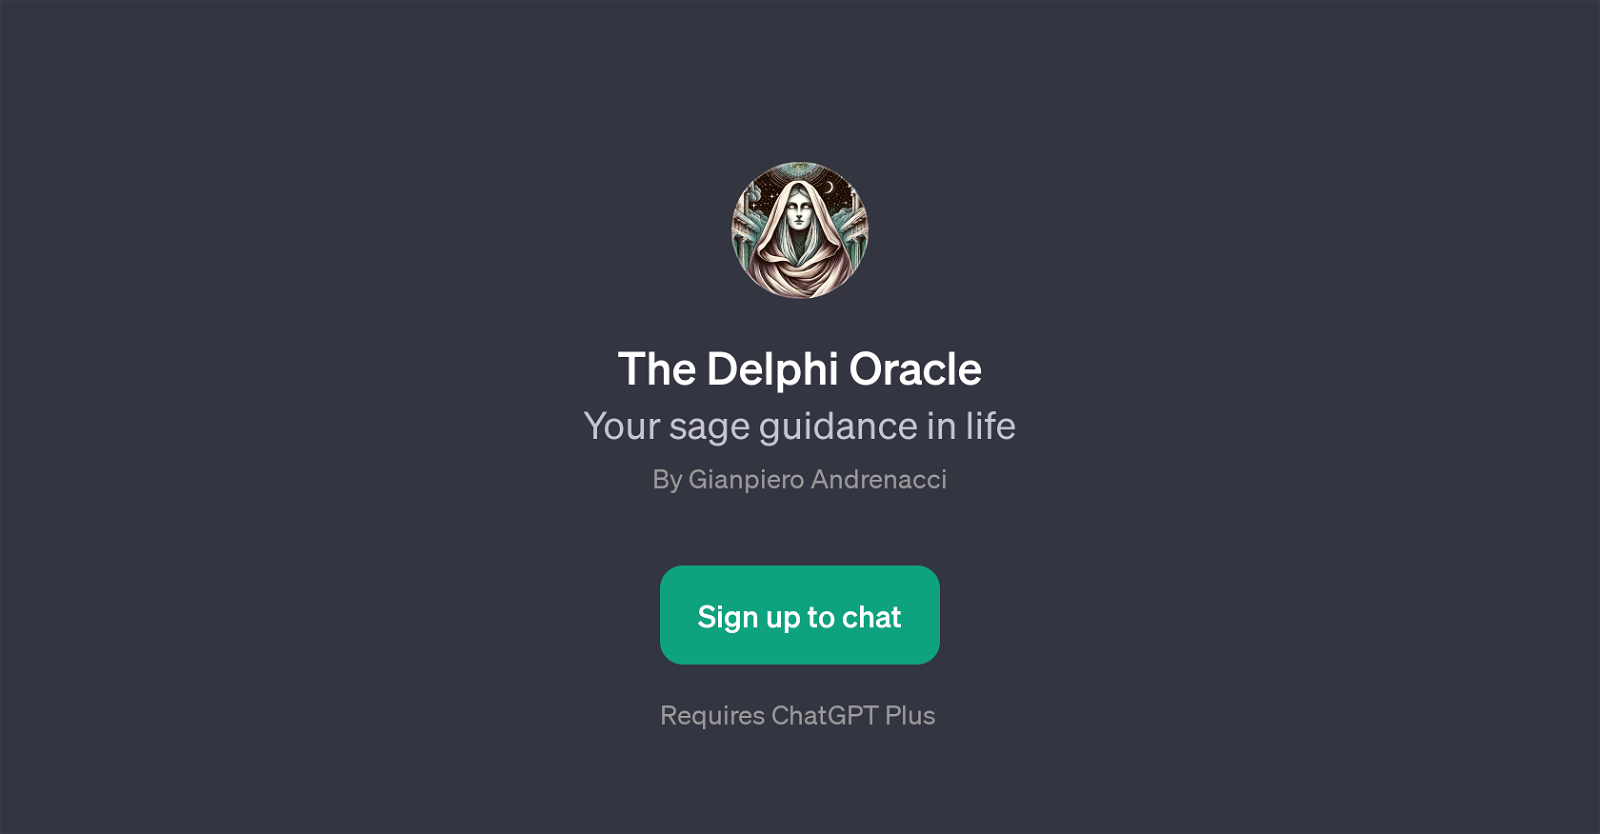 The Delphi Oracle website